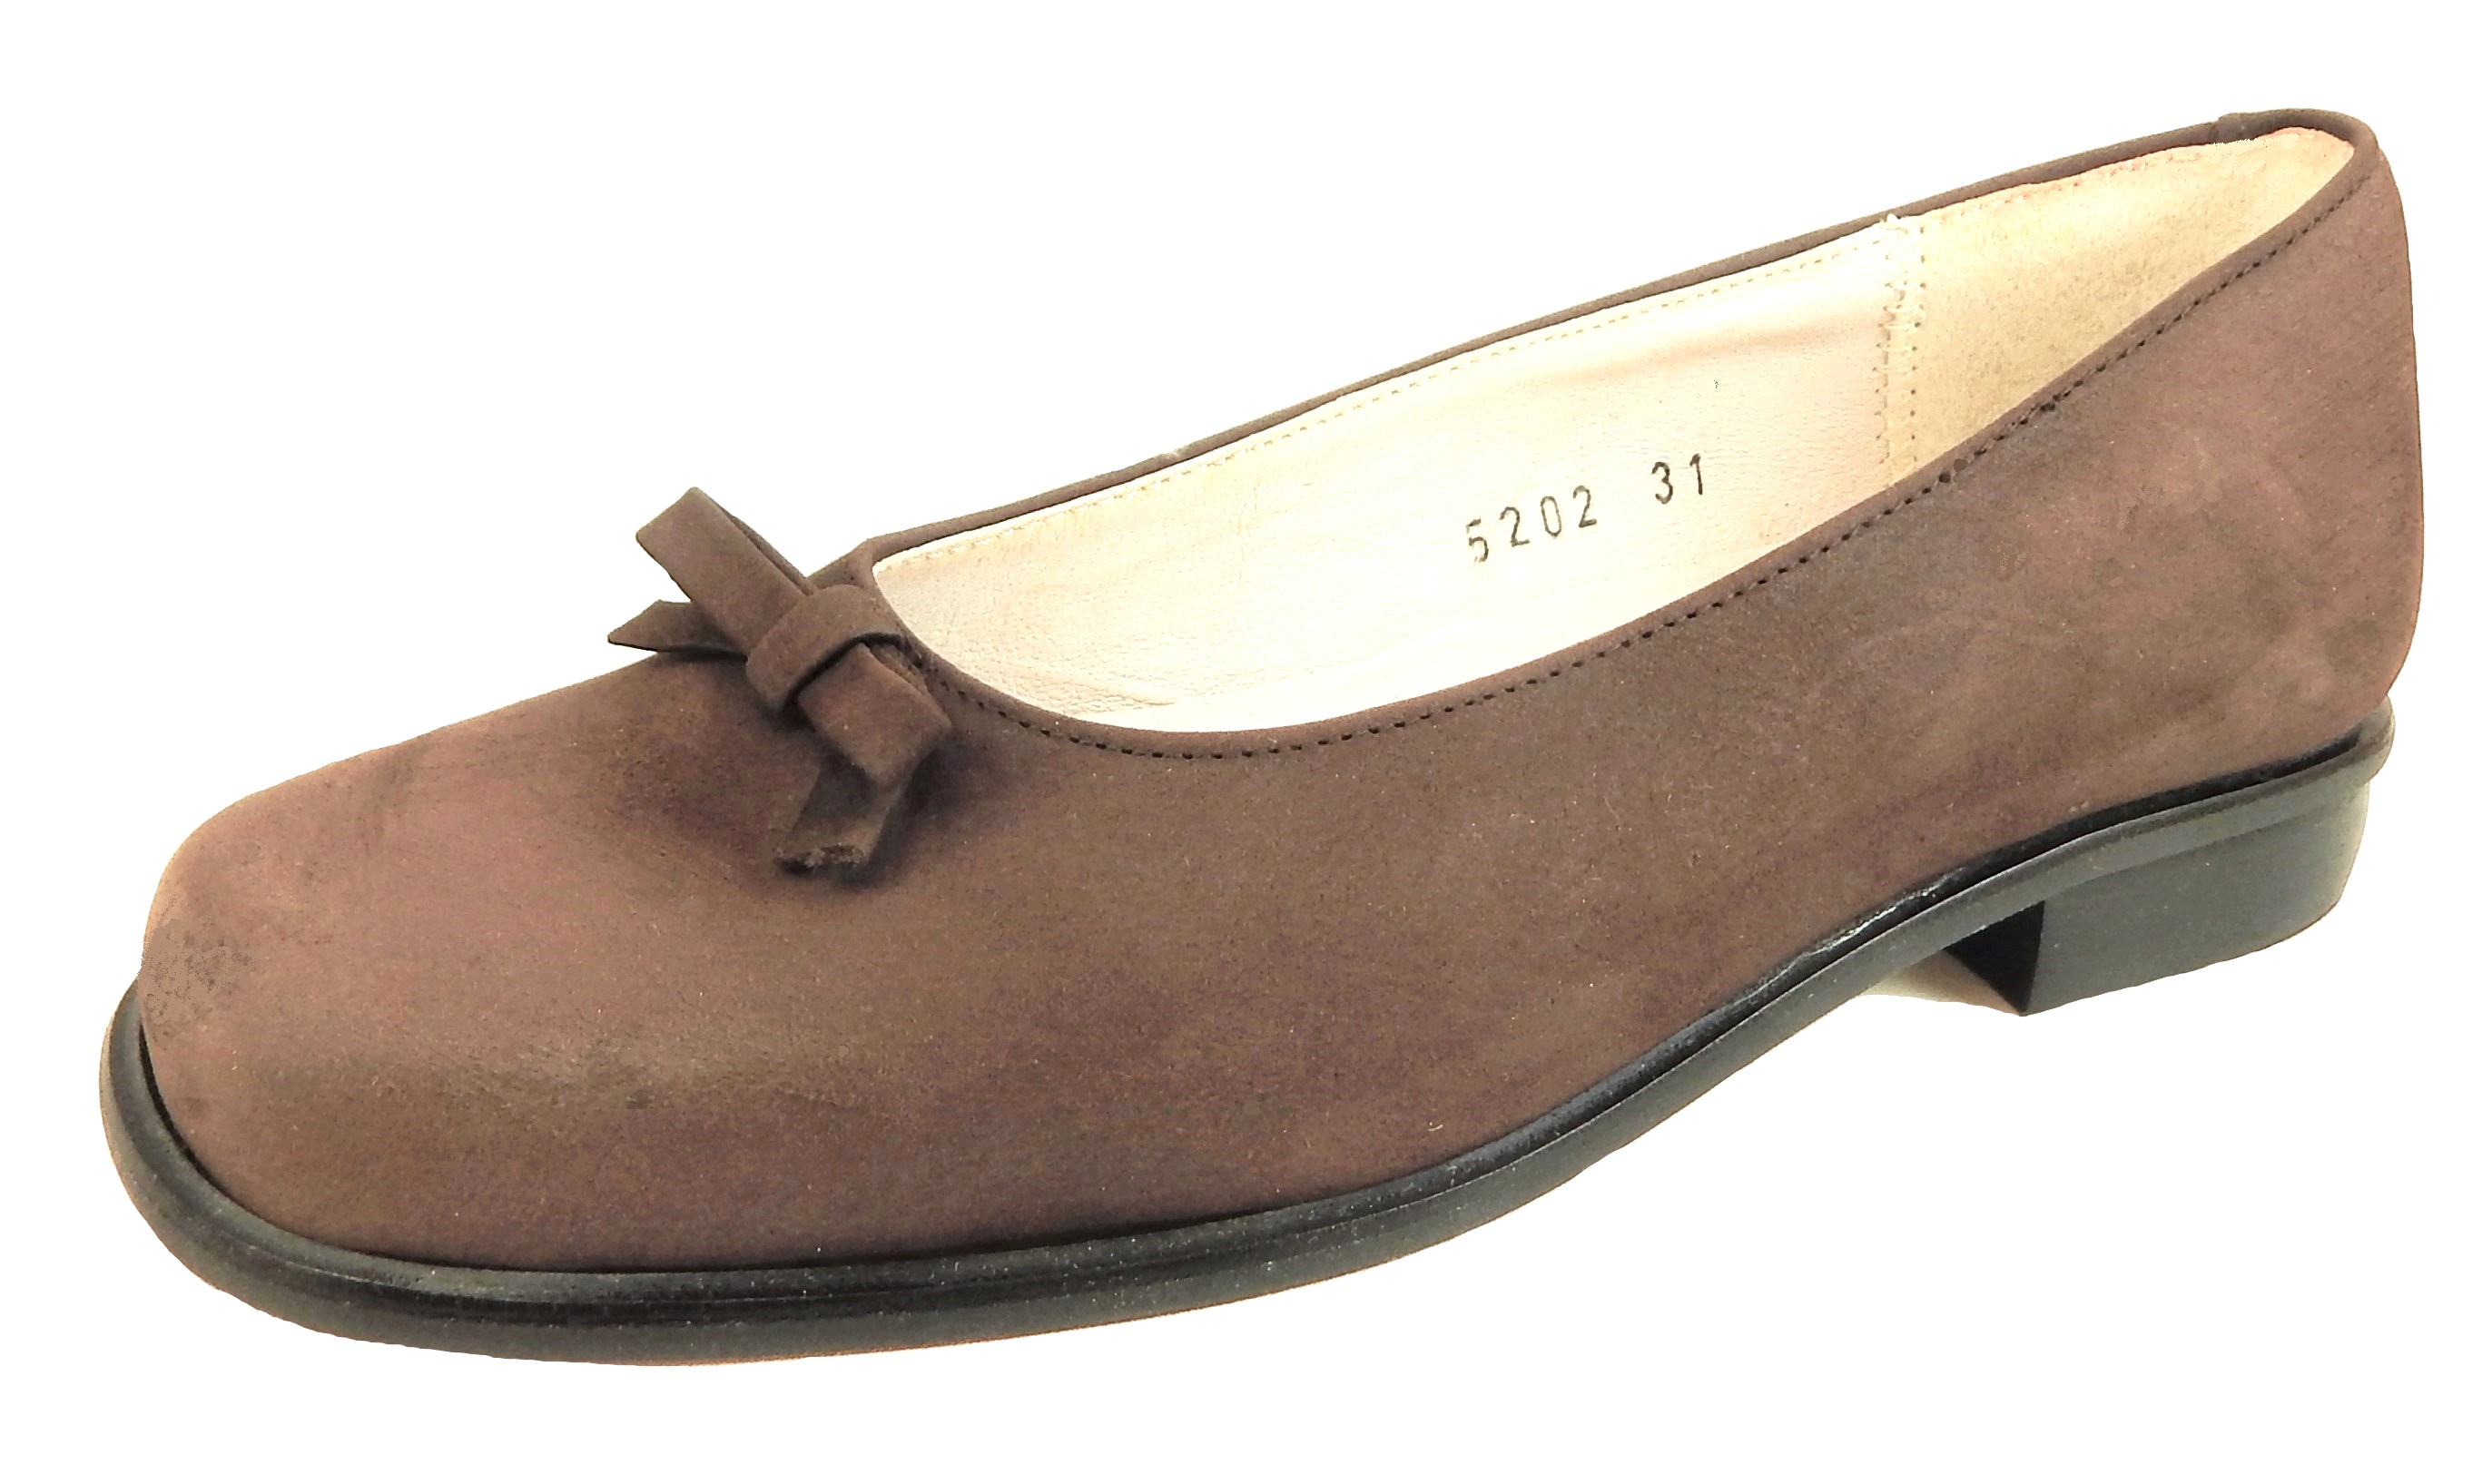 B-5202 - Brown Nubuck Ballet Flats - Euro 31 Size 13